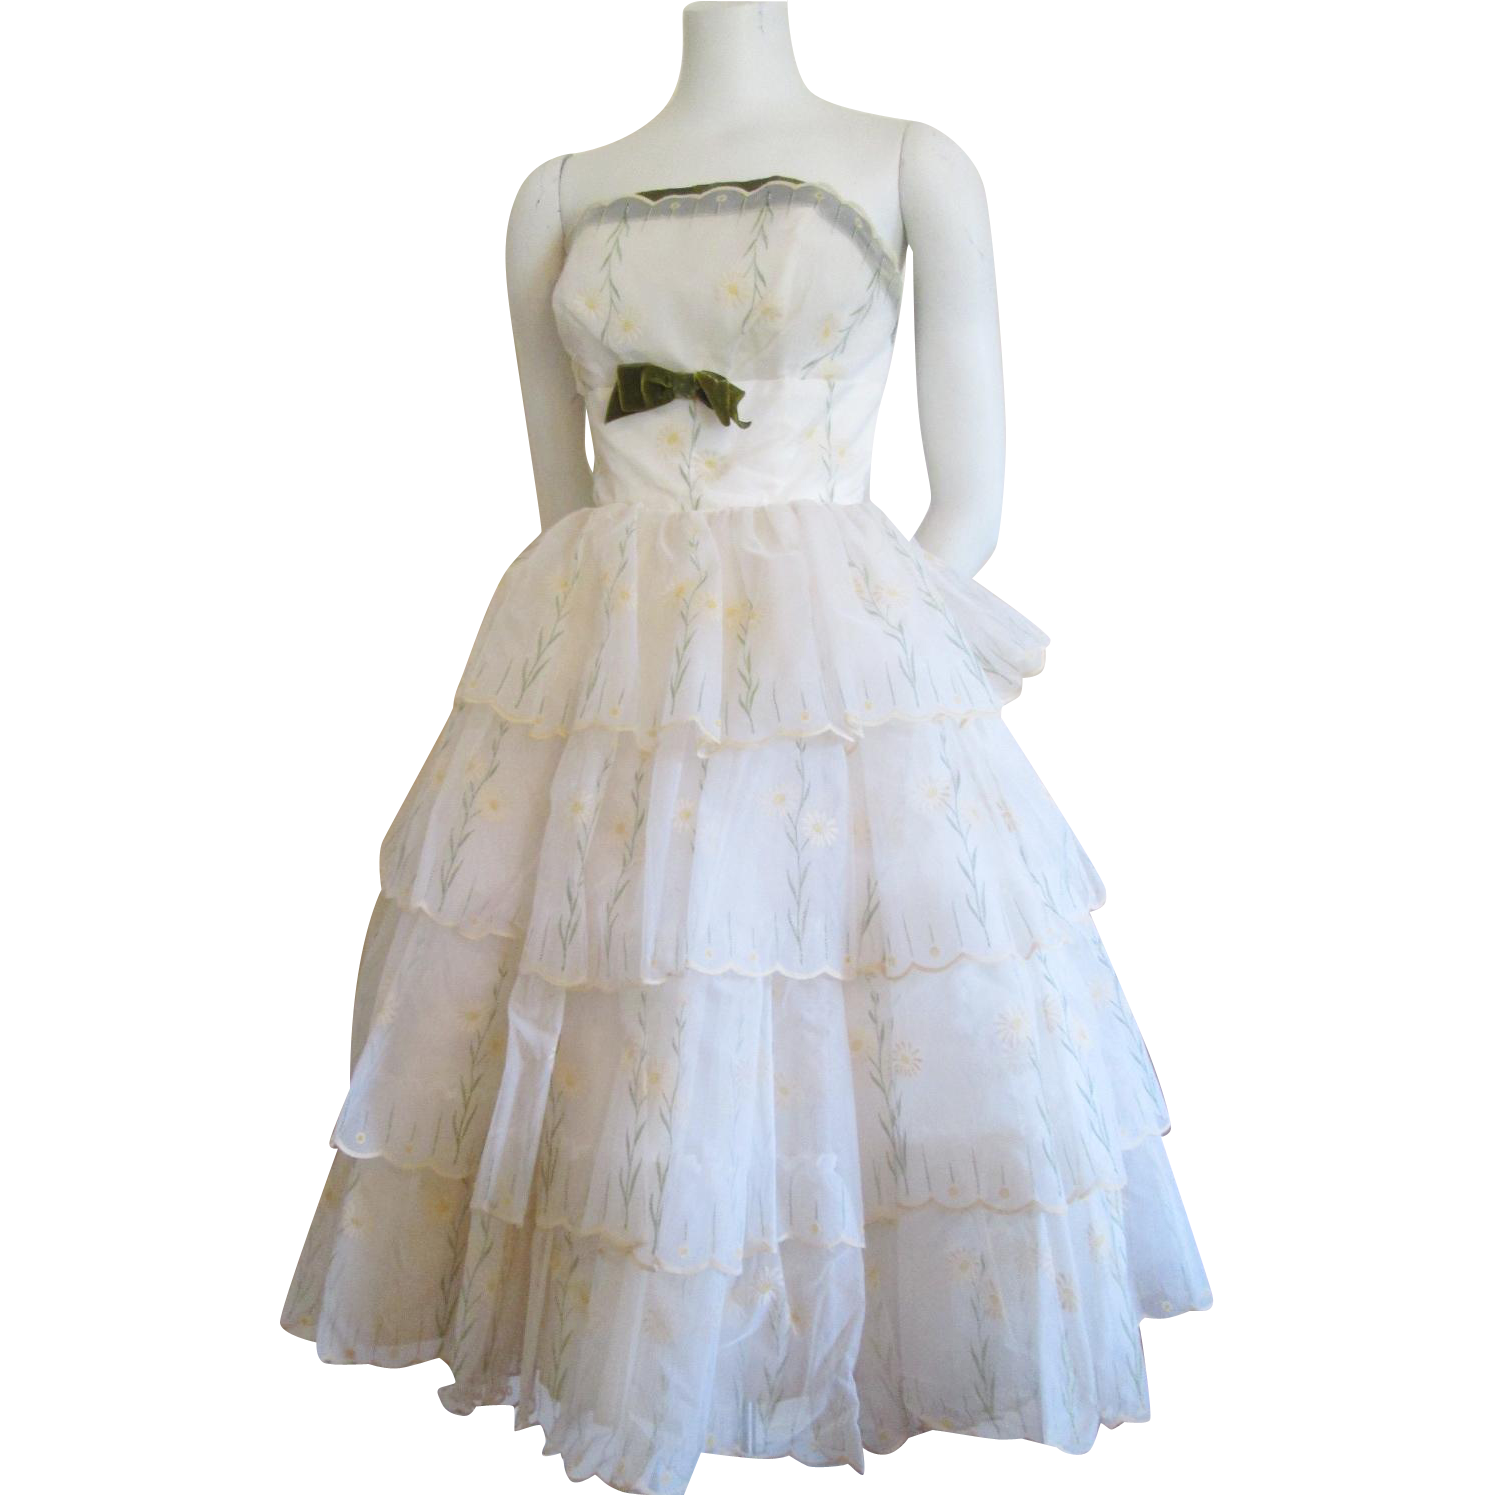 Dress Vintage 1950s Daisy Flower Tulle Skirt Strapless Party Prom ...